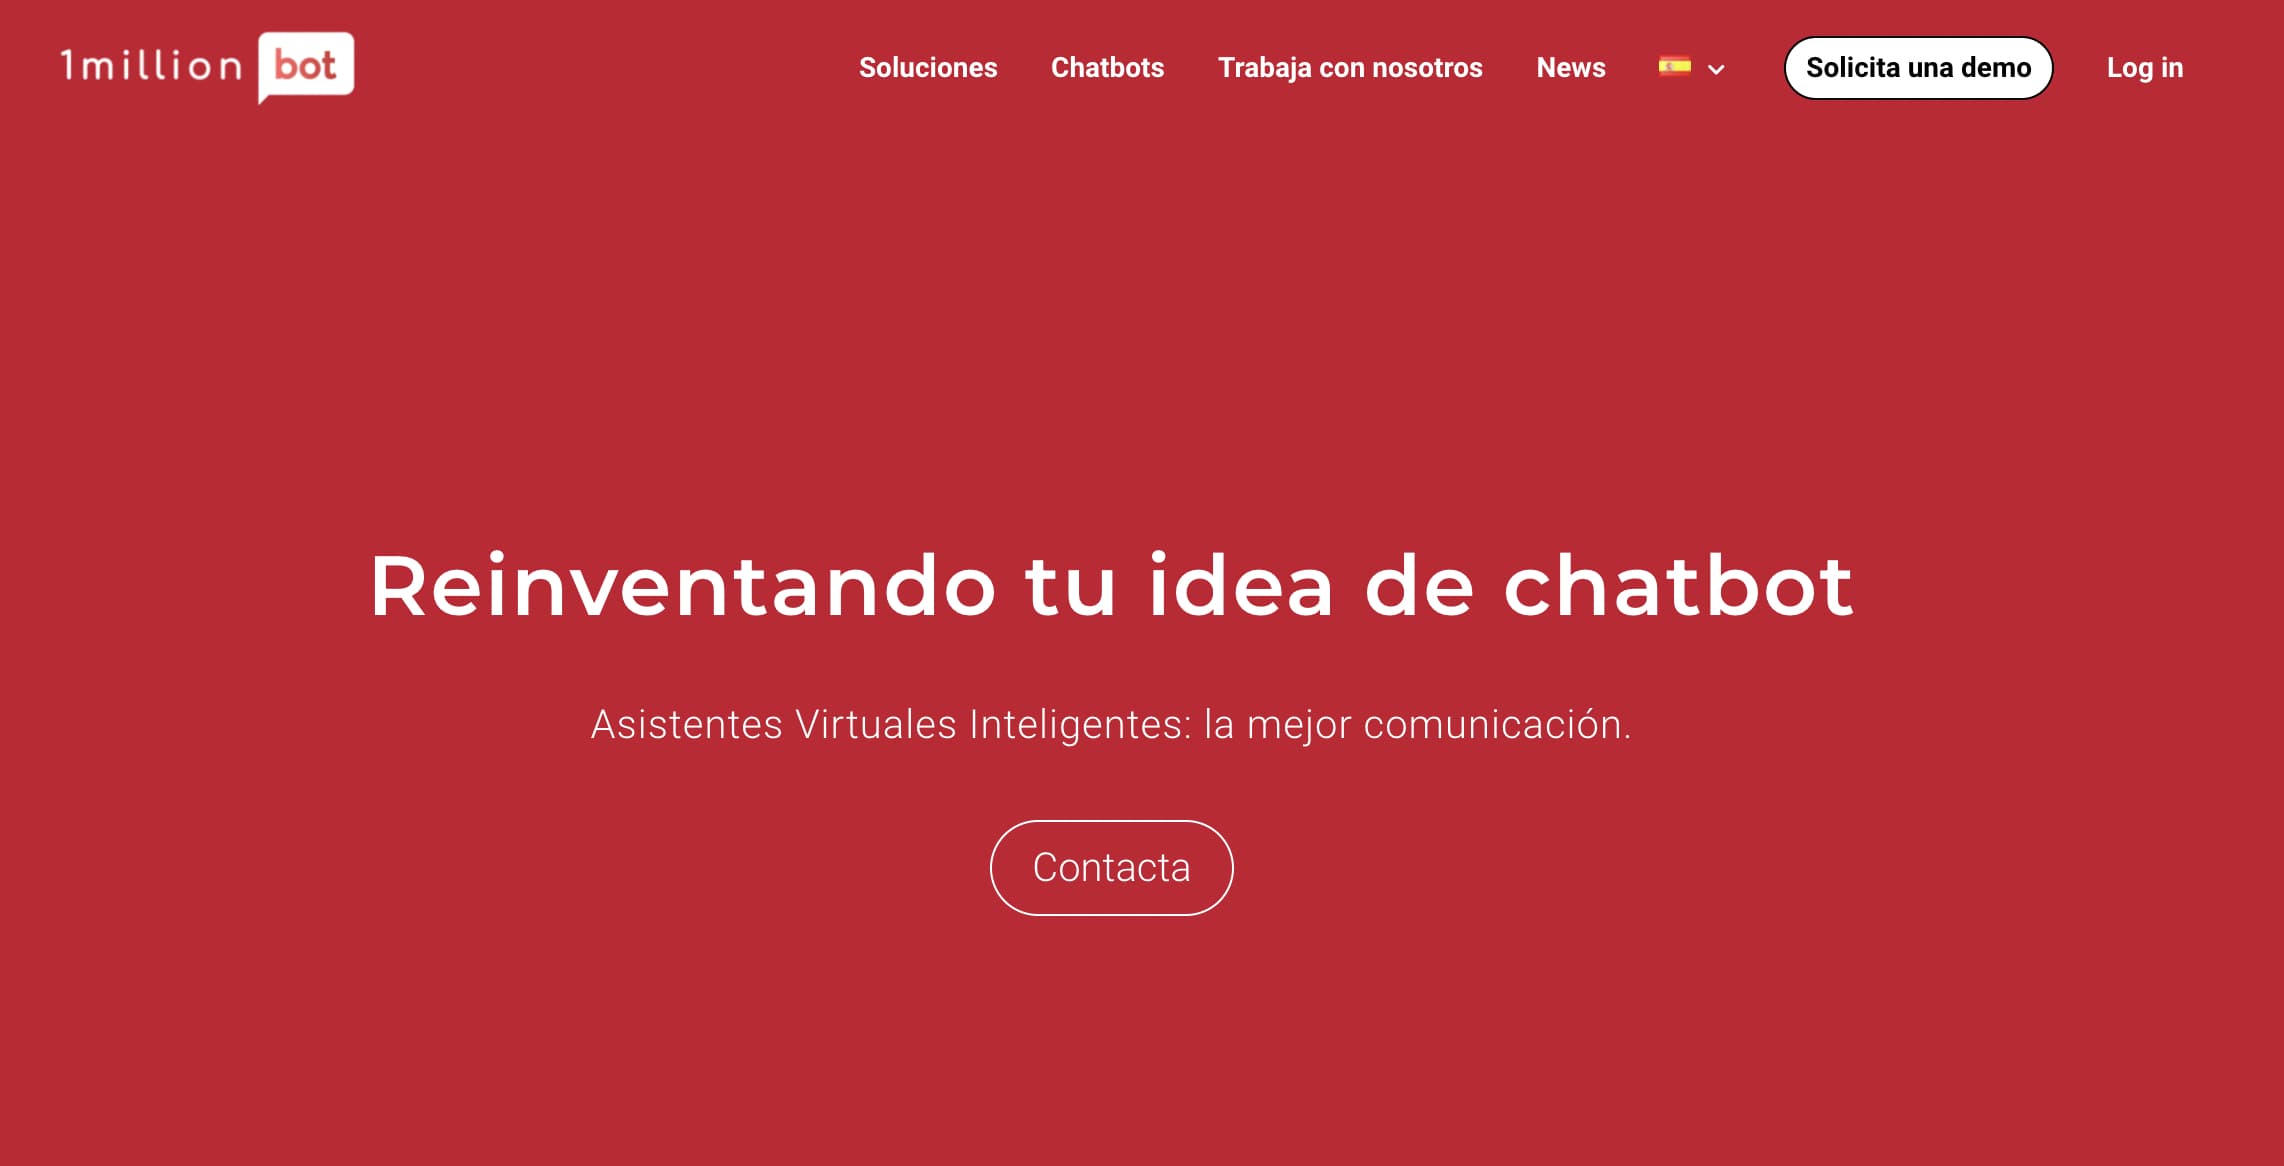 Mejores chatbots en español: 1millionbot